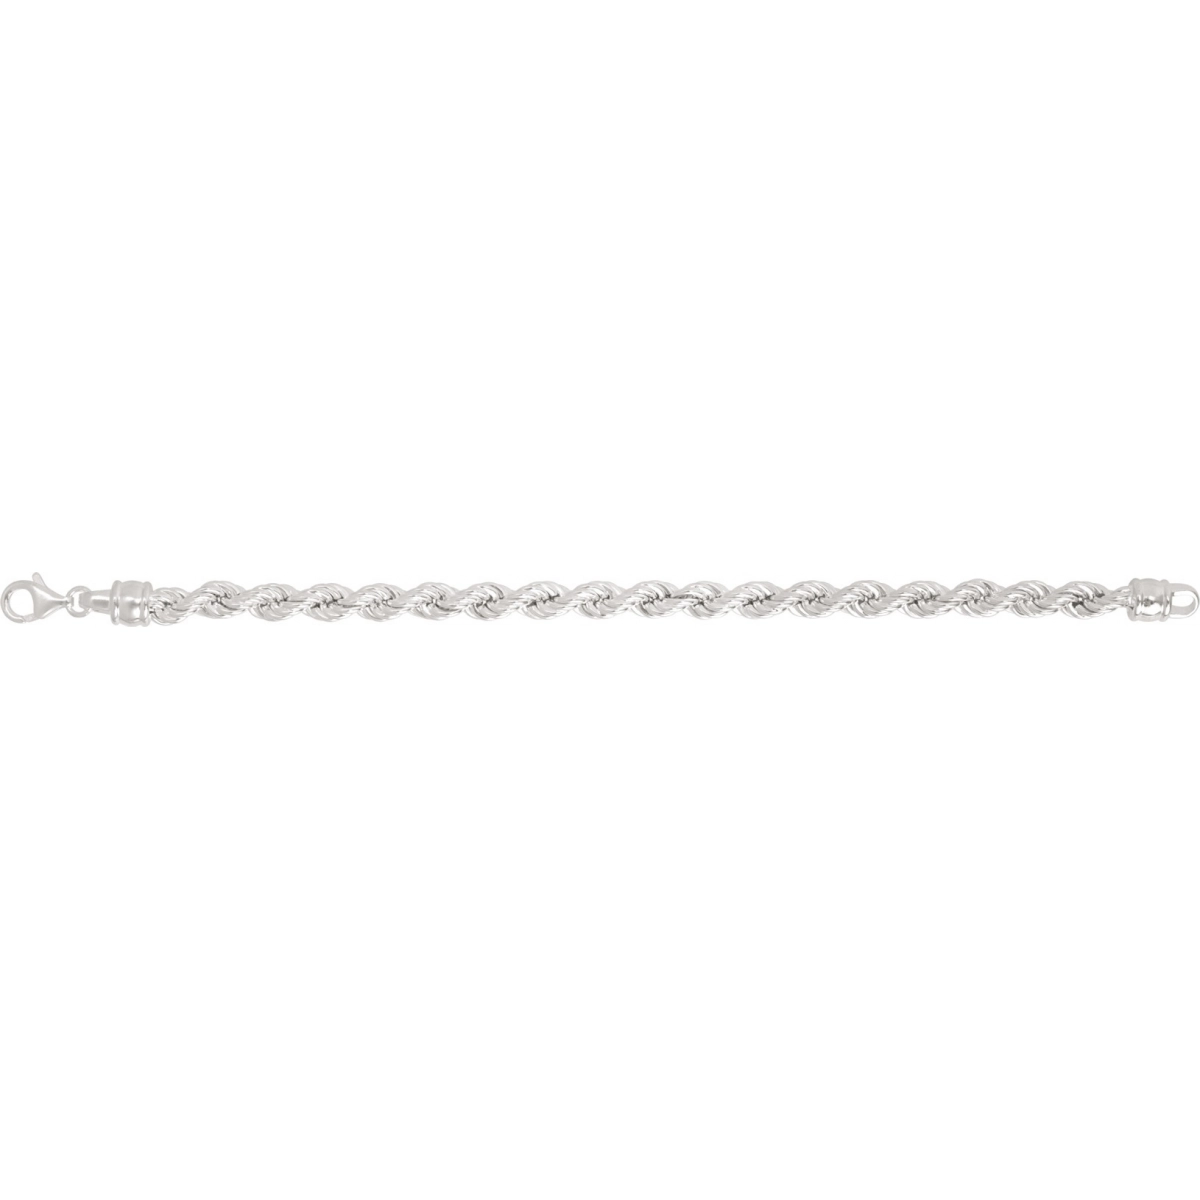 Necklace rh925 Silver - Size: 40  Lua Blanca  331091C.40